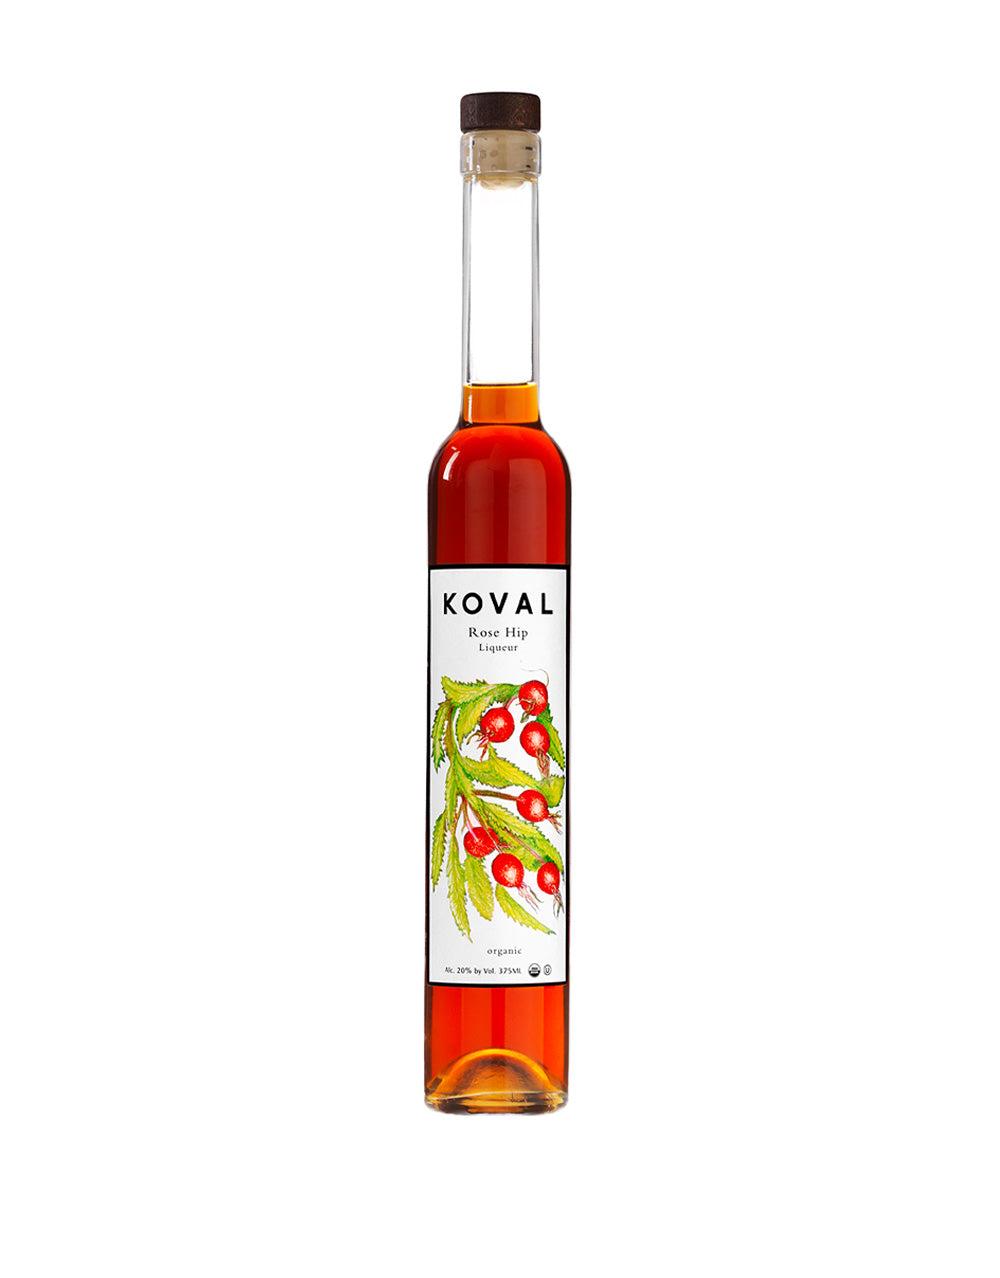 KOVAL Rosehip Liqueur